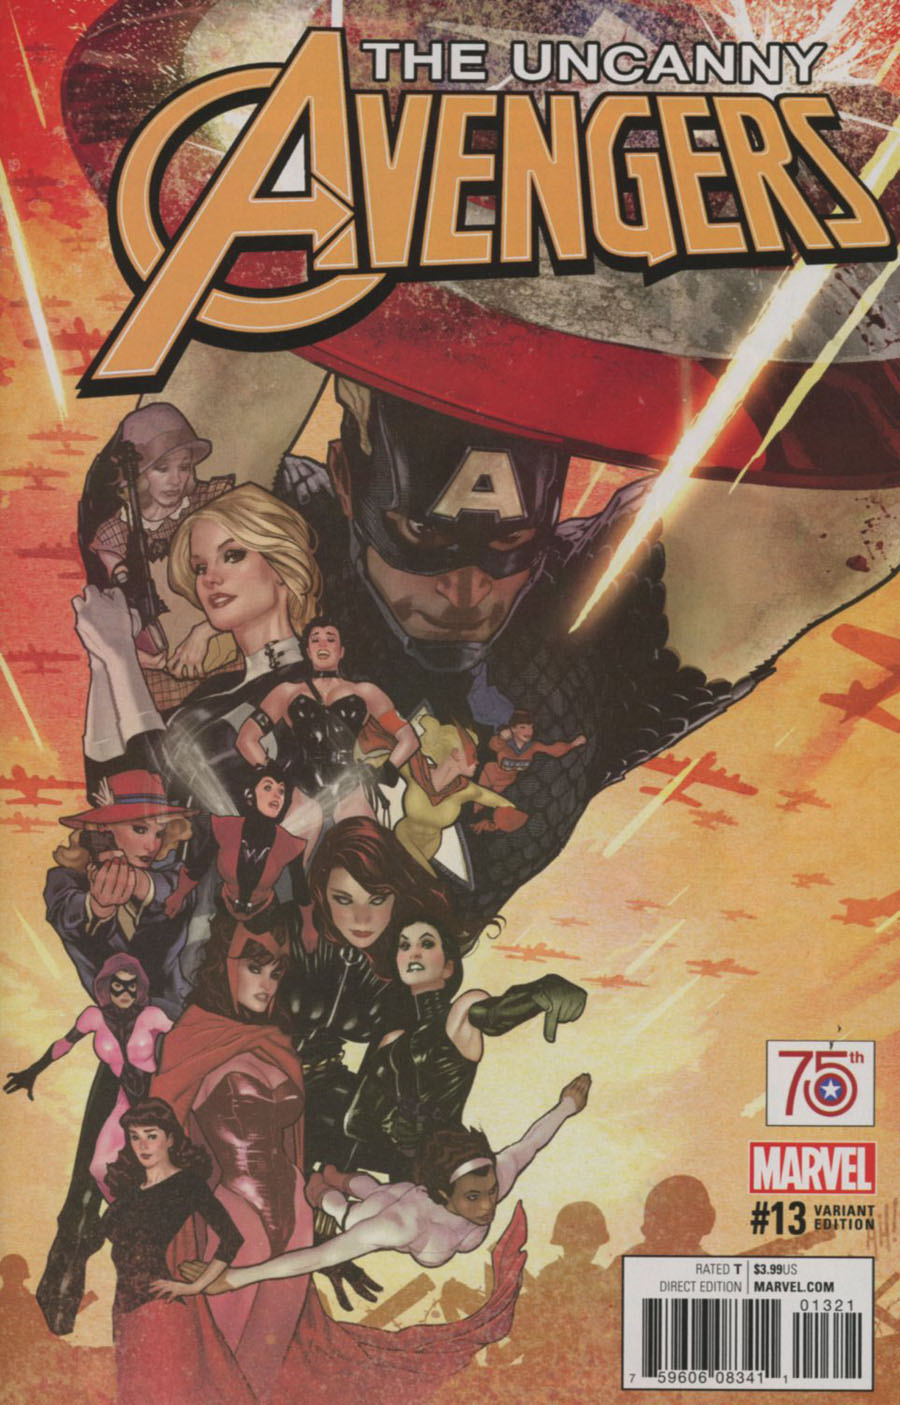 Uncanny Avengers Vol 3 #13 Cover B Incentive Adam Hughes Captain America 75th Anniversary Variant Cover (Civil War II Tie-In)